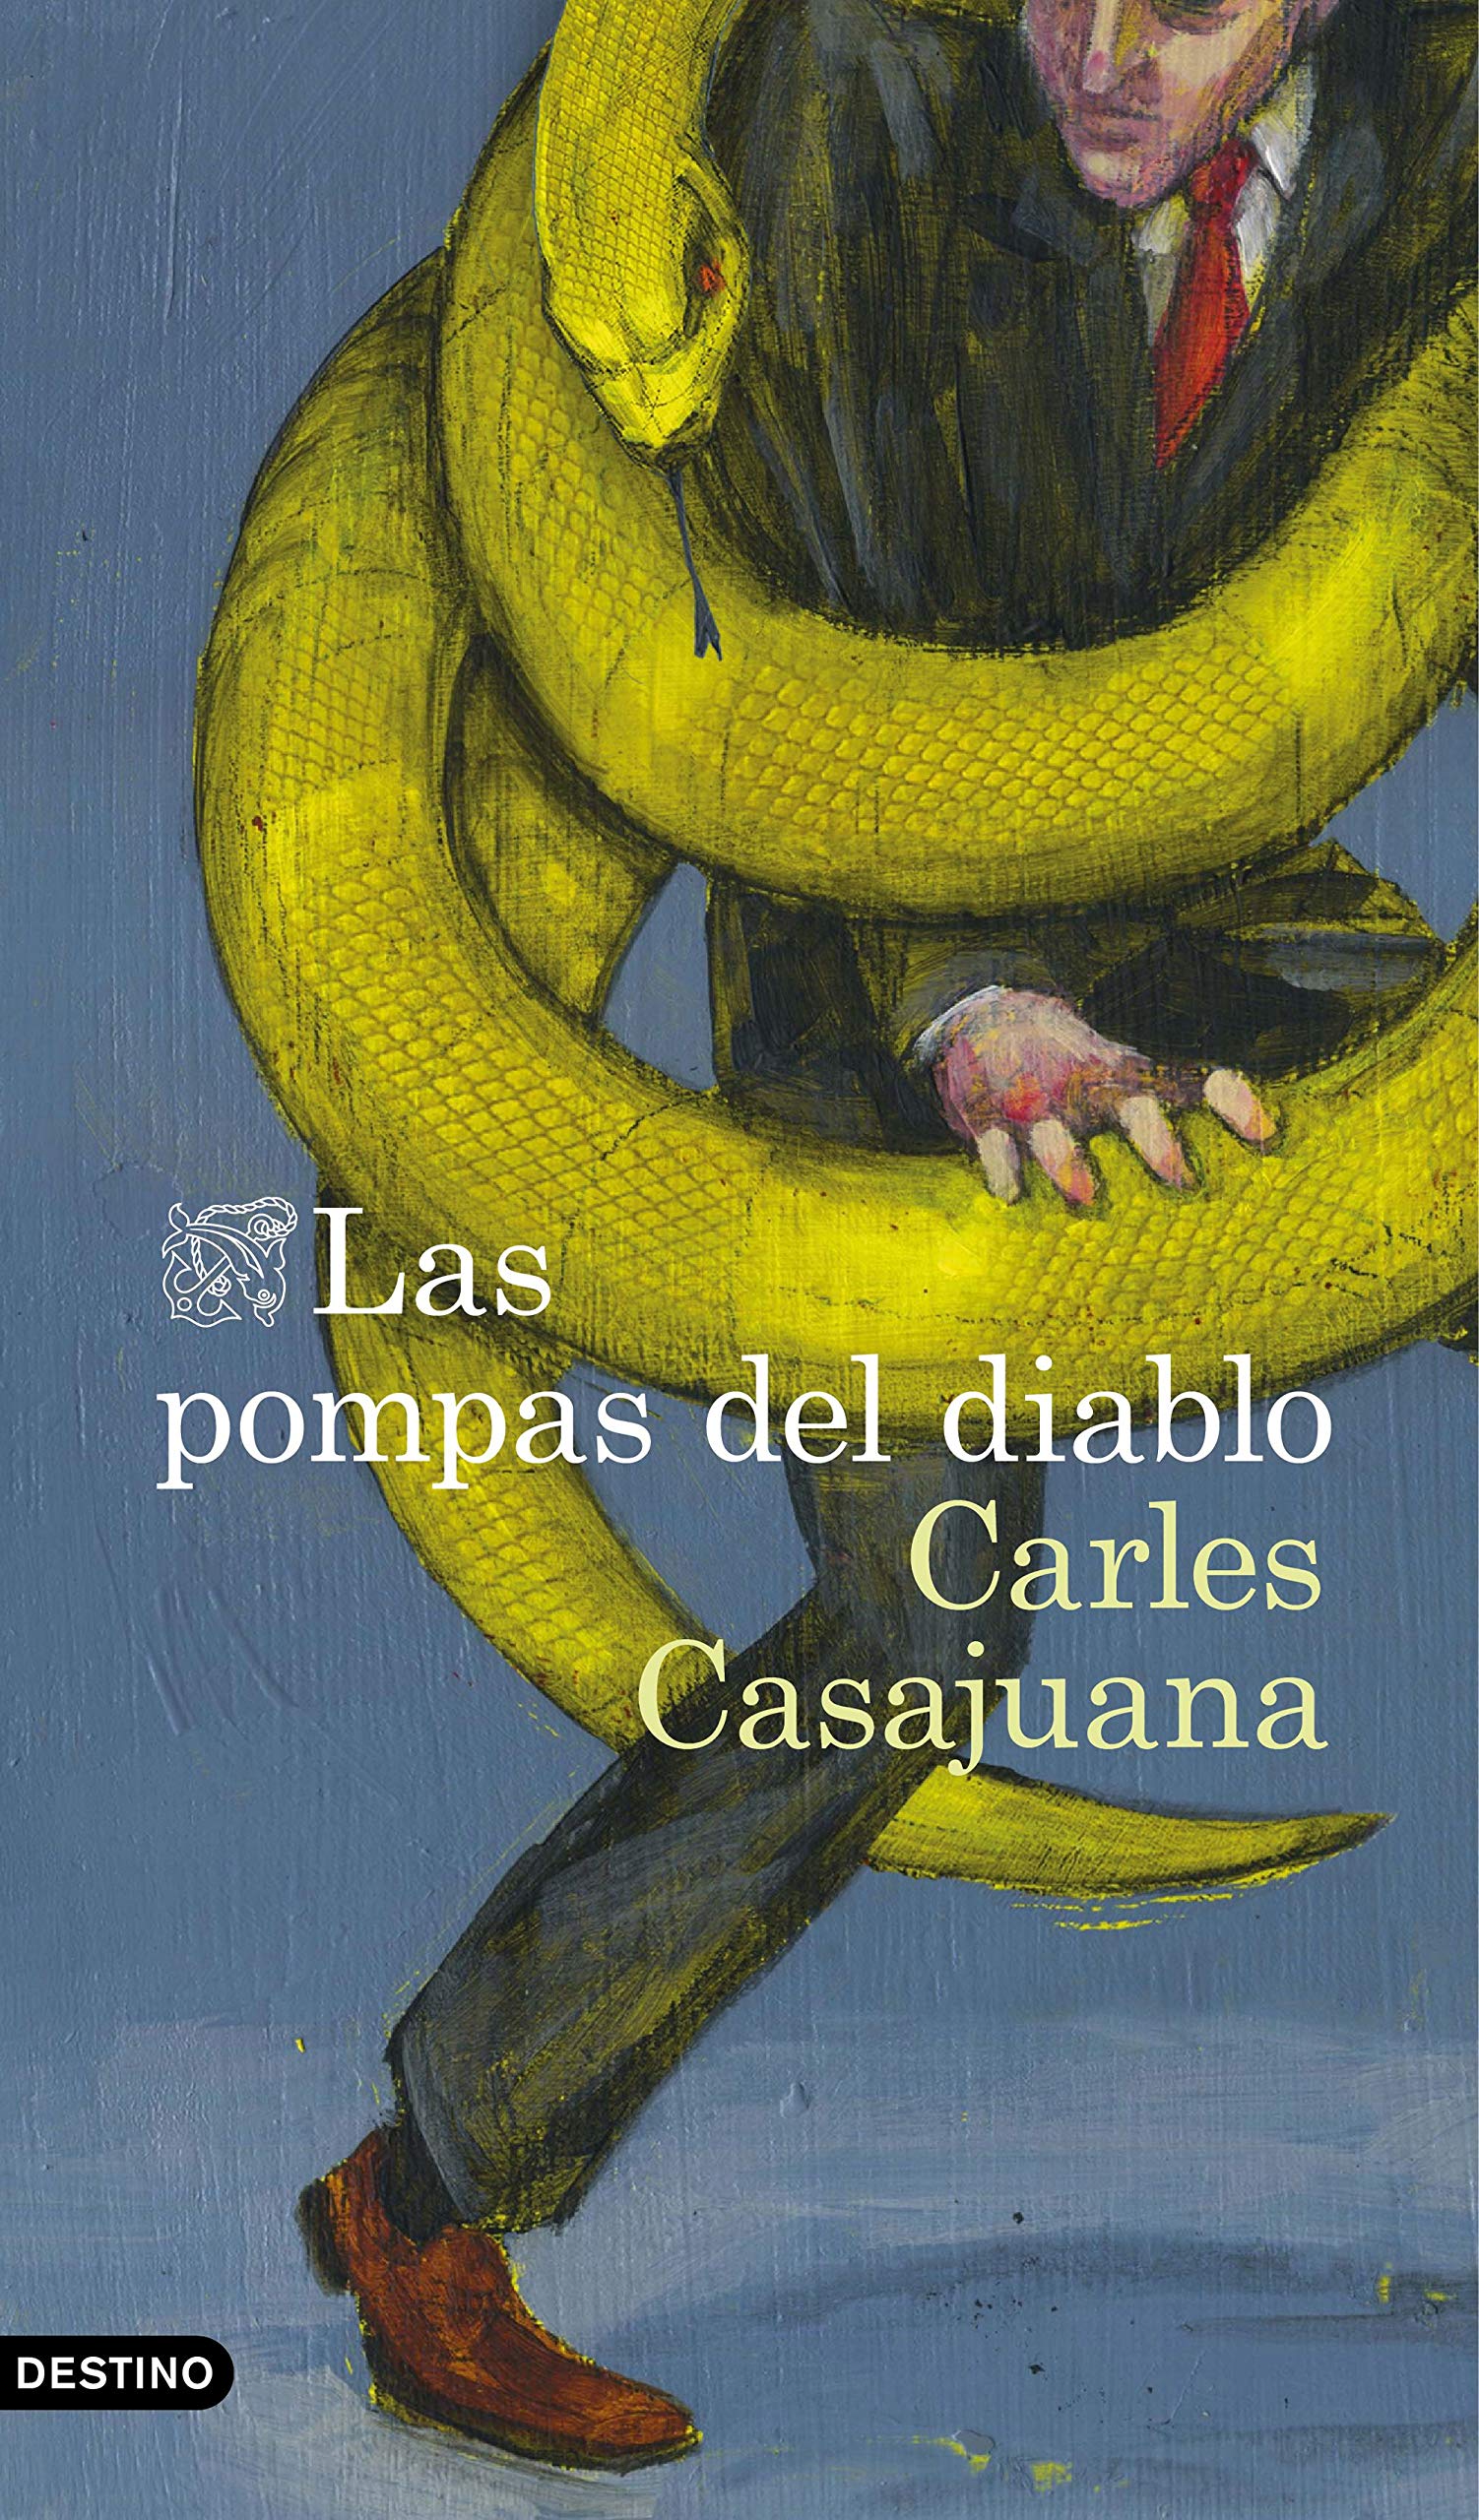 Portada de 'Las Pompas del diablo' de Carles Casajuana, un libro recomendable para regalar el próximo día de Sant Jordi